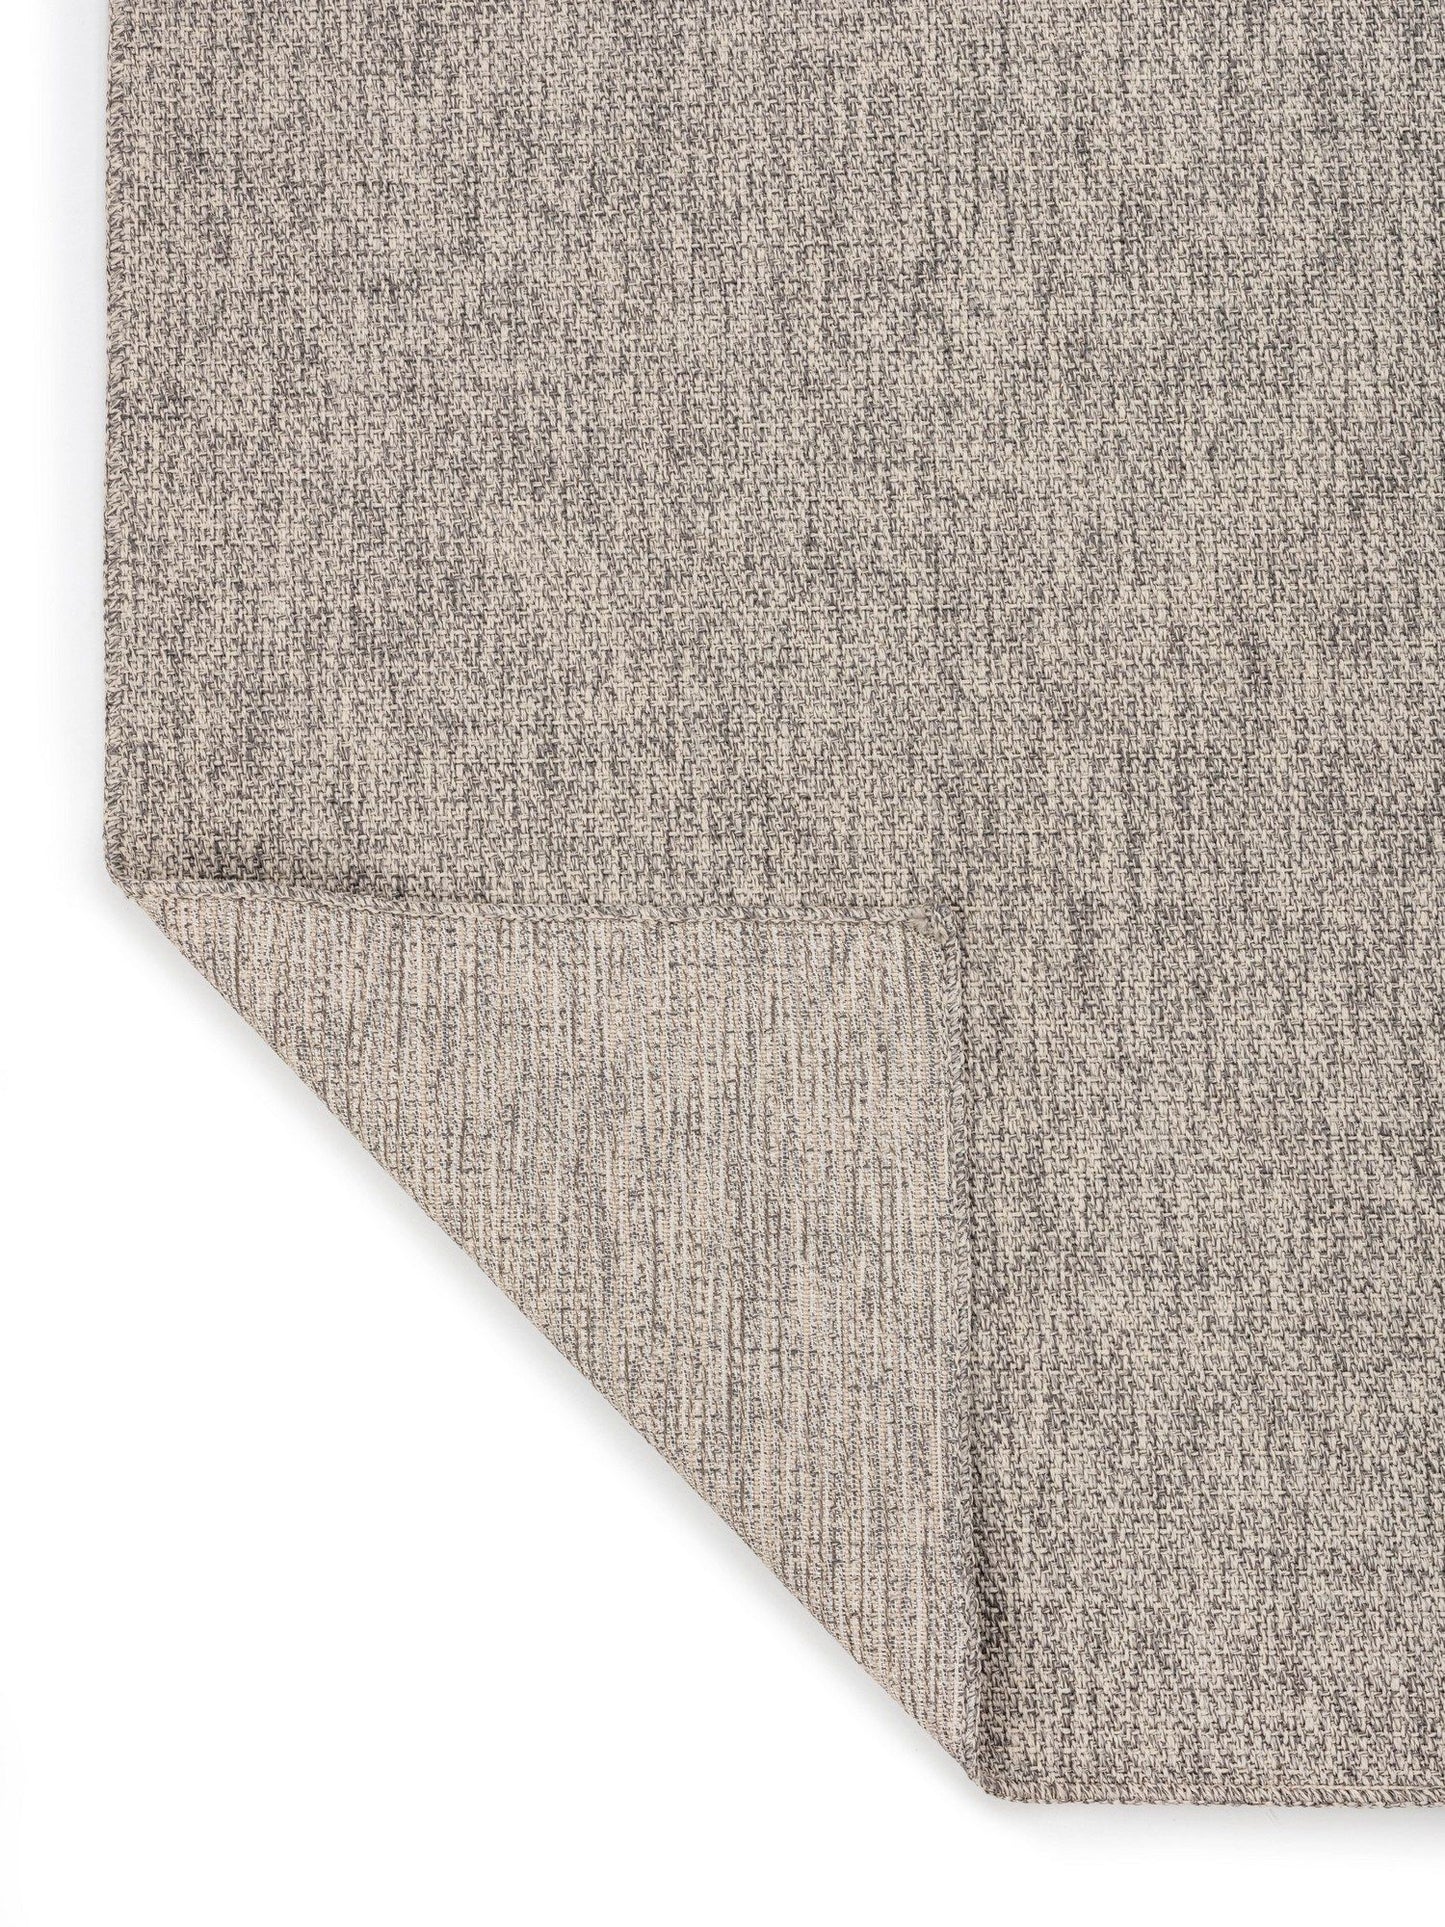 0602 Jut - Grey - Carpet (80 x 150)